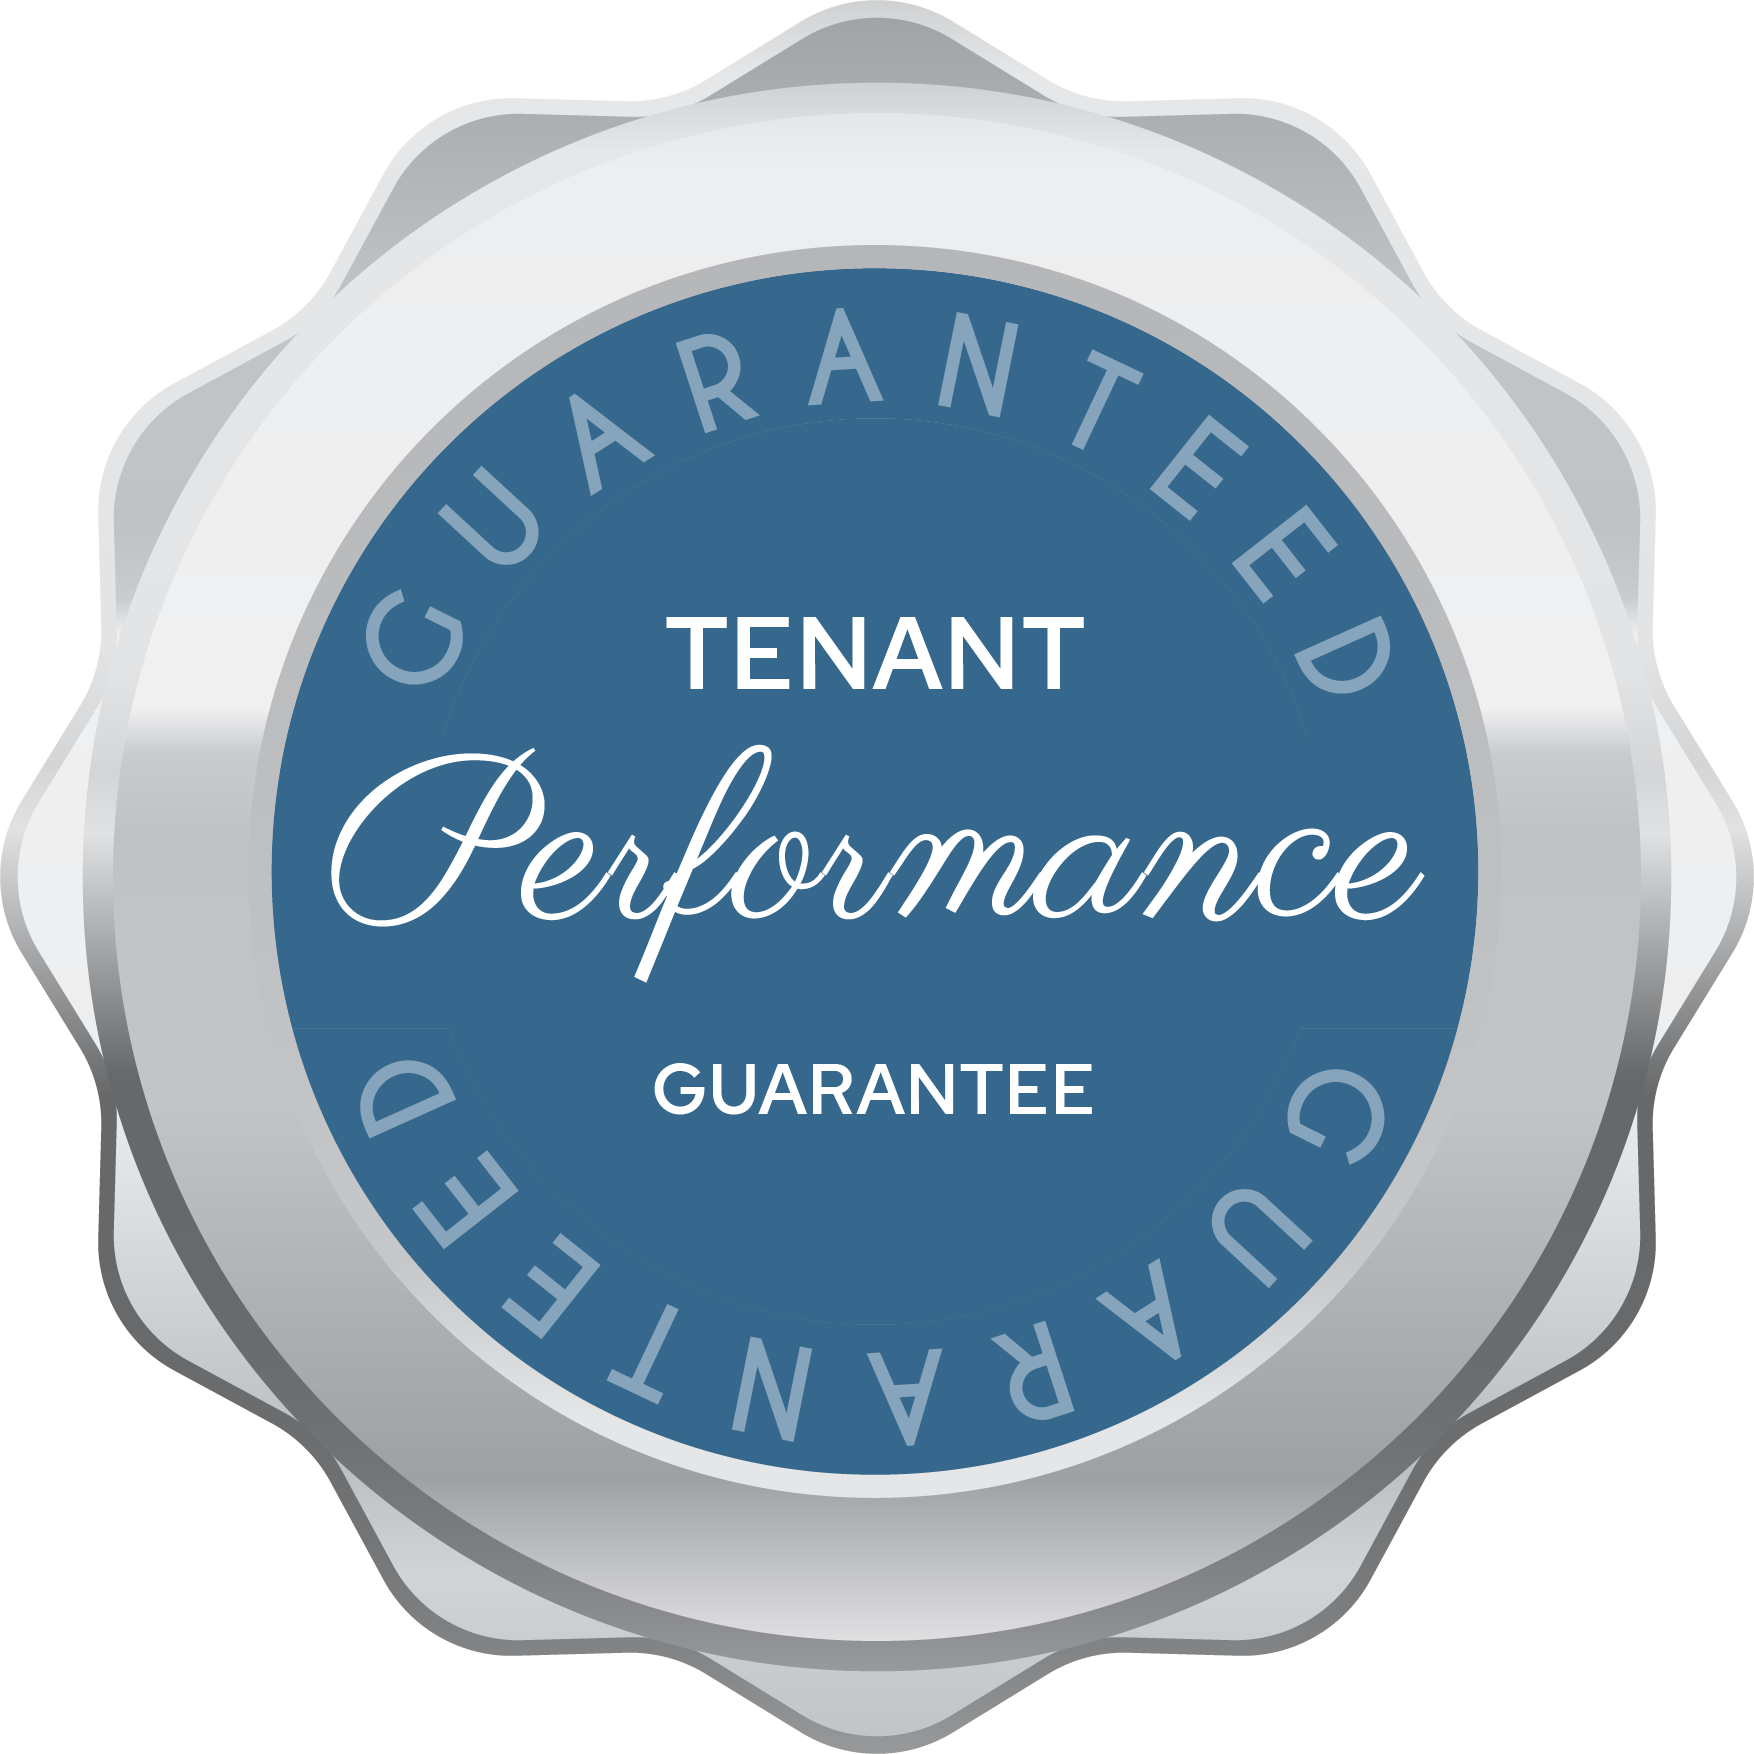 Tenant Performance Guarantee Badge